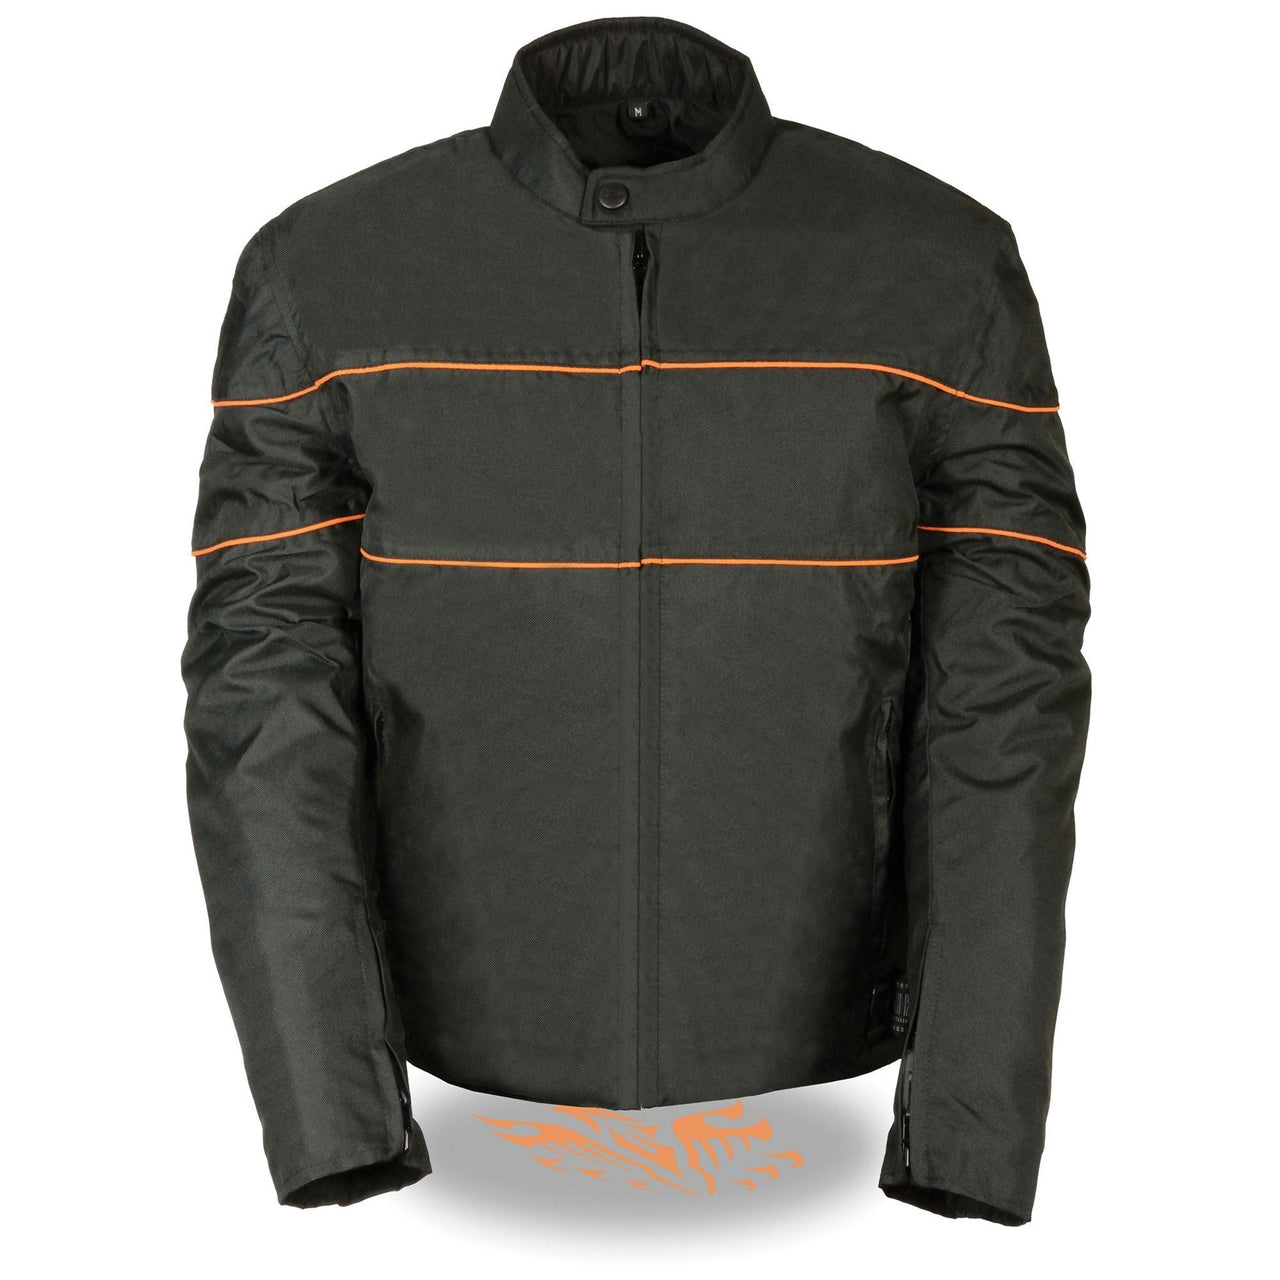 Men's Scooter Style Textile Jacket w/ Orange Stripes - HighwayLeather